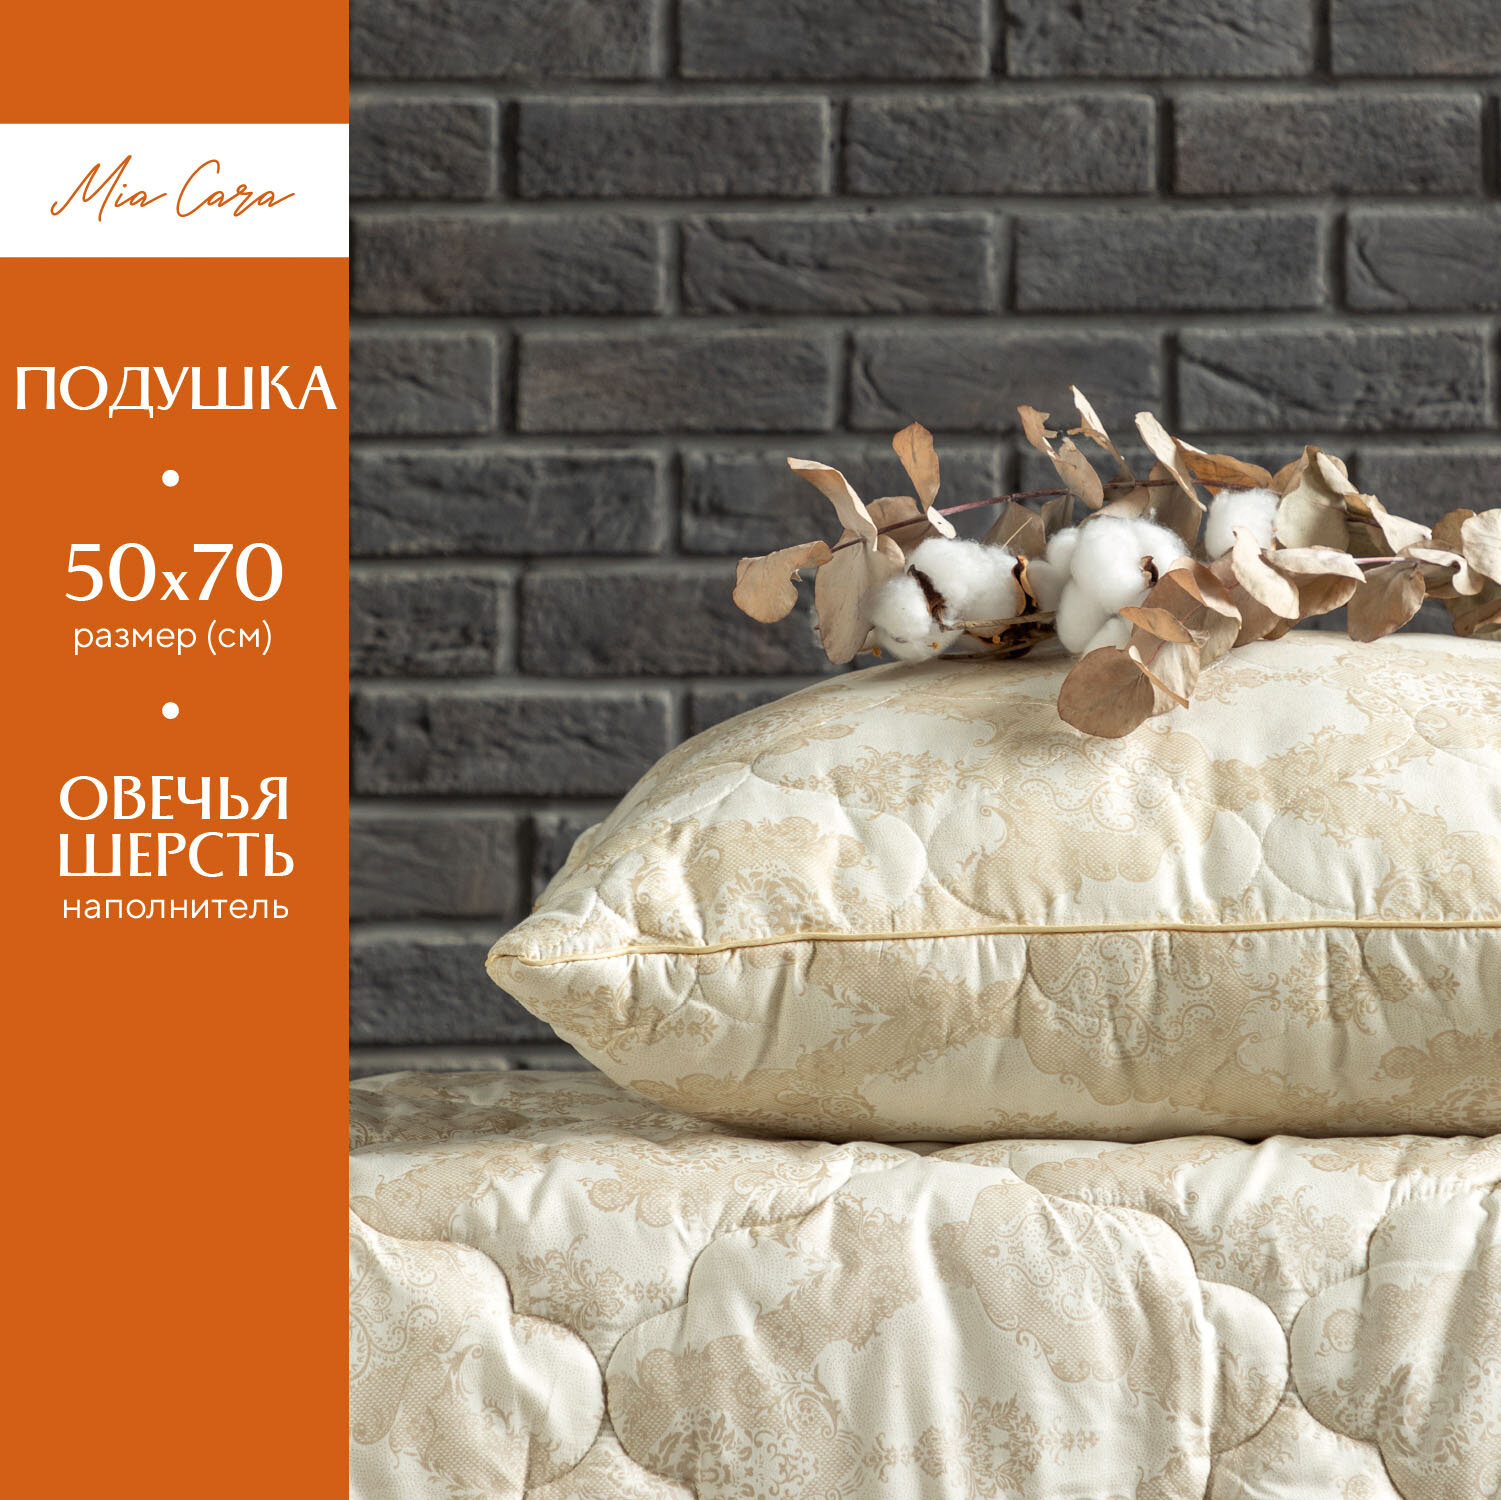 Подушка для сна 50х70 овечья шерсть "Mia Cara" Bellasonno 50х70 овечья шерсть